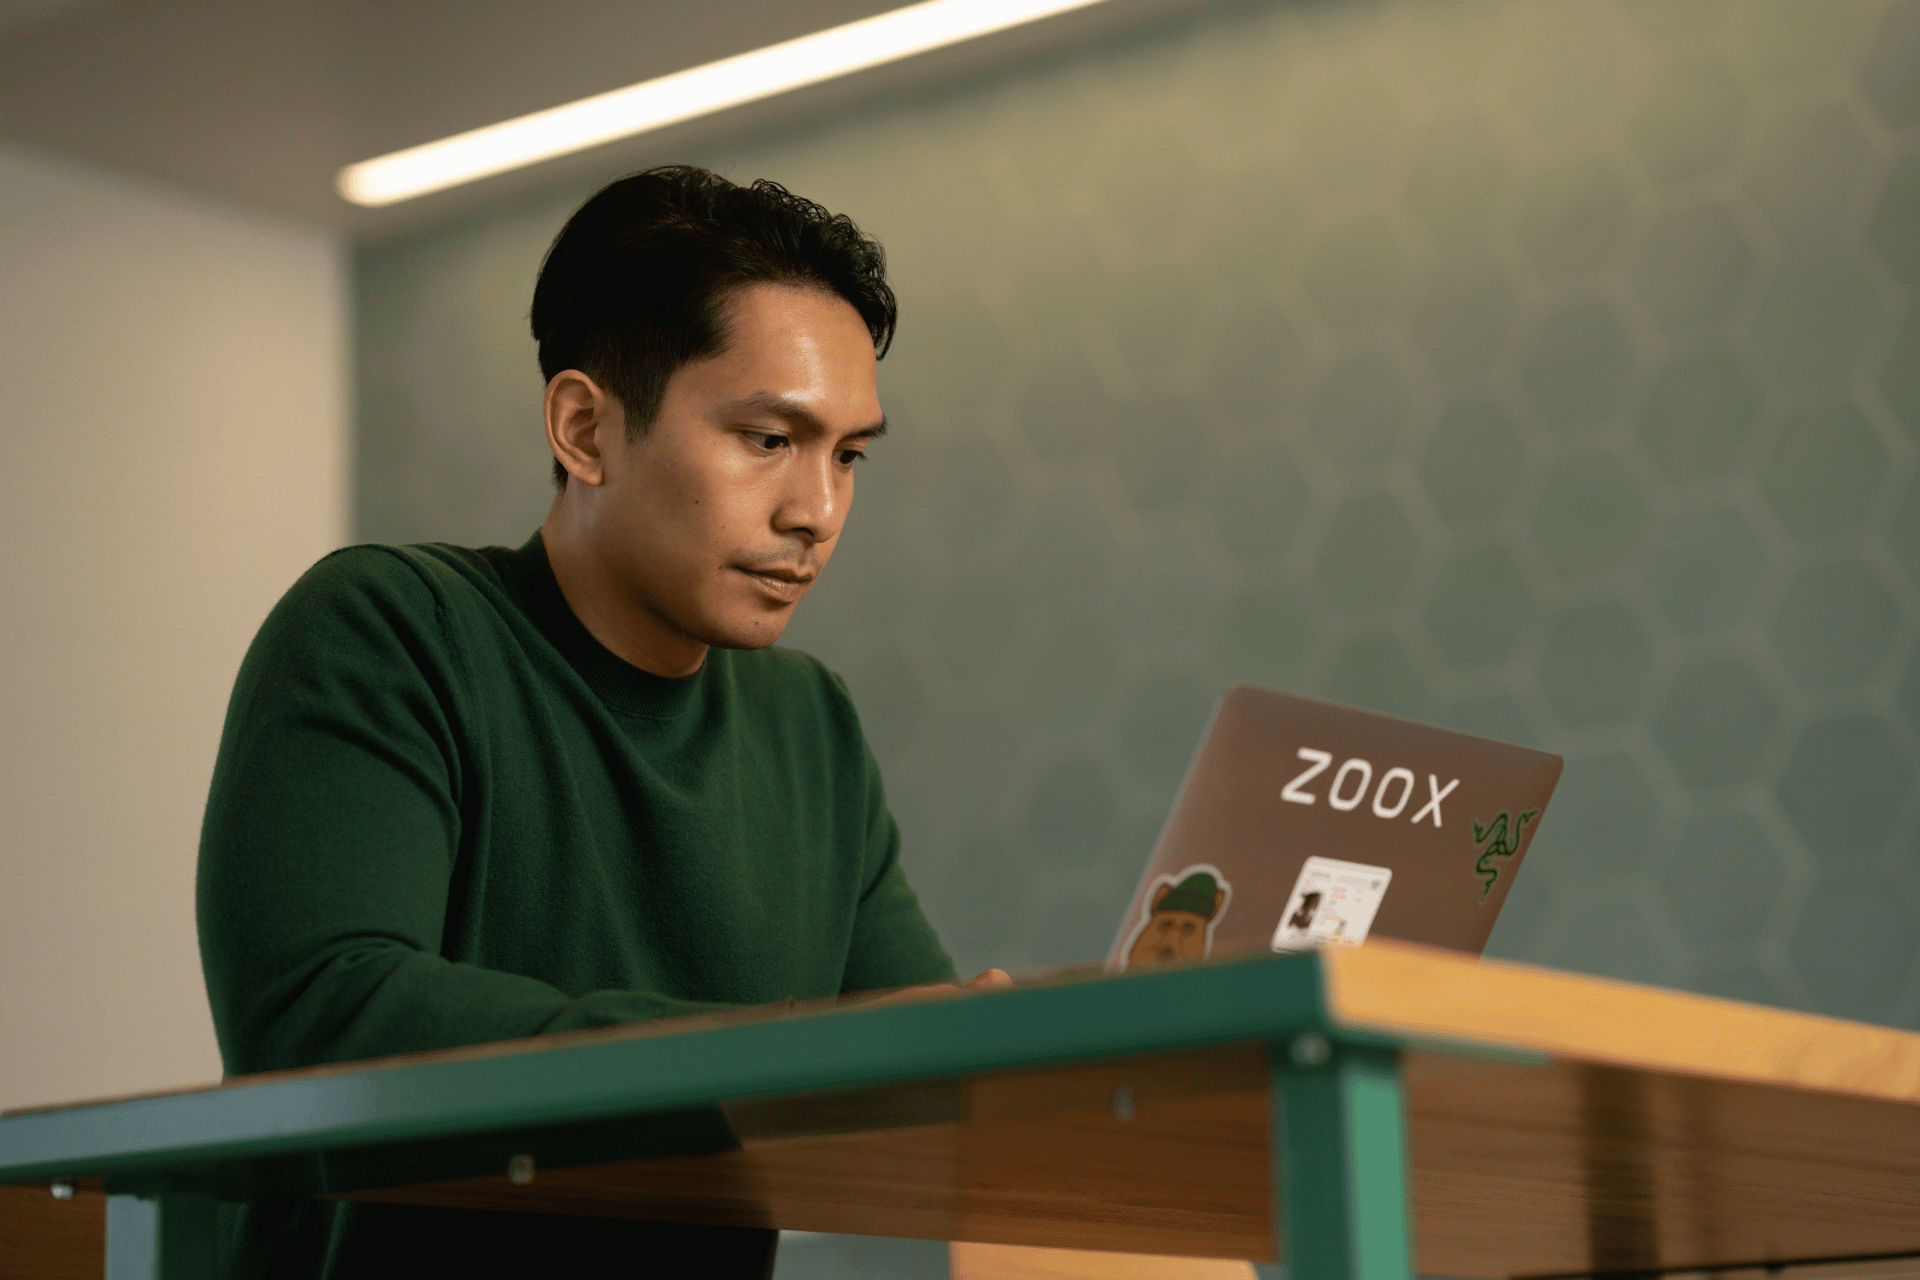 Zoox employee Reymark working on his laptop in Zoox office